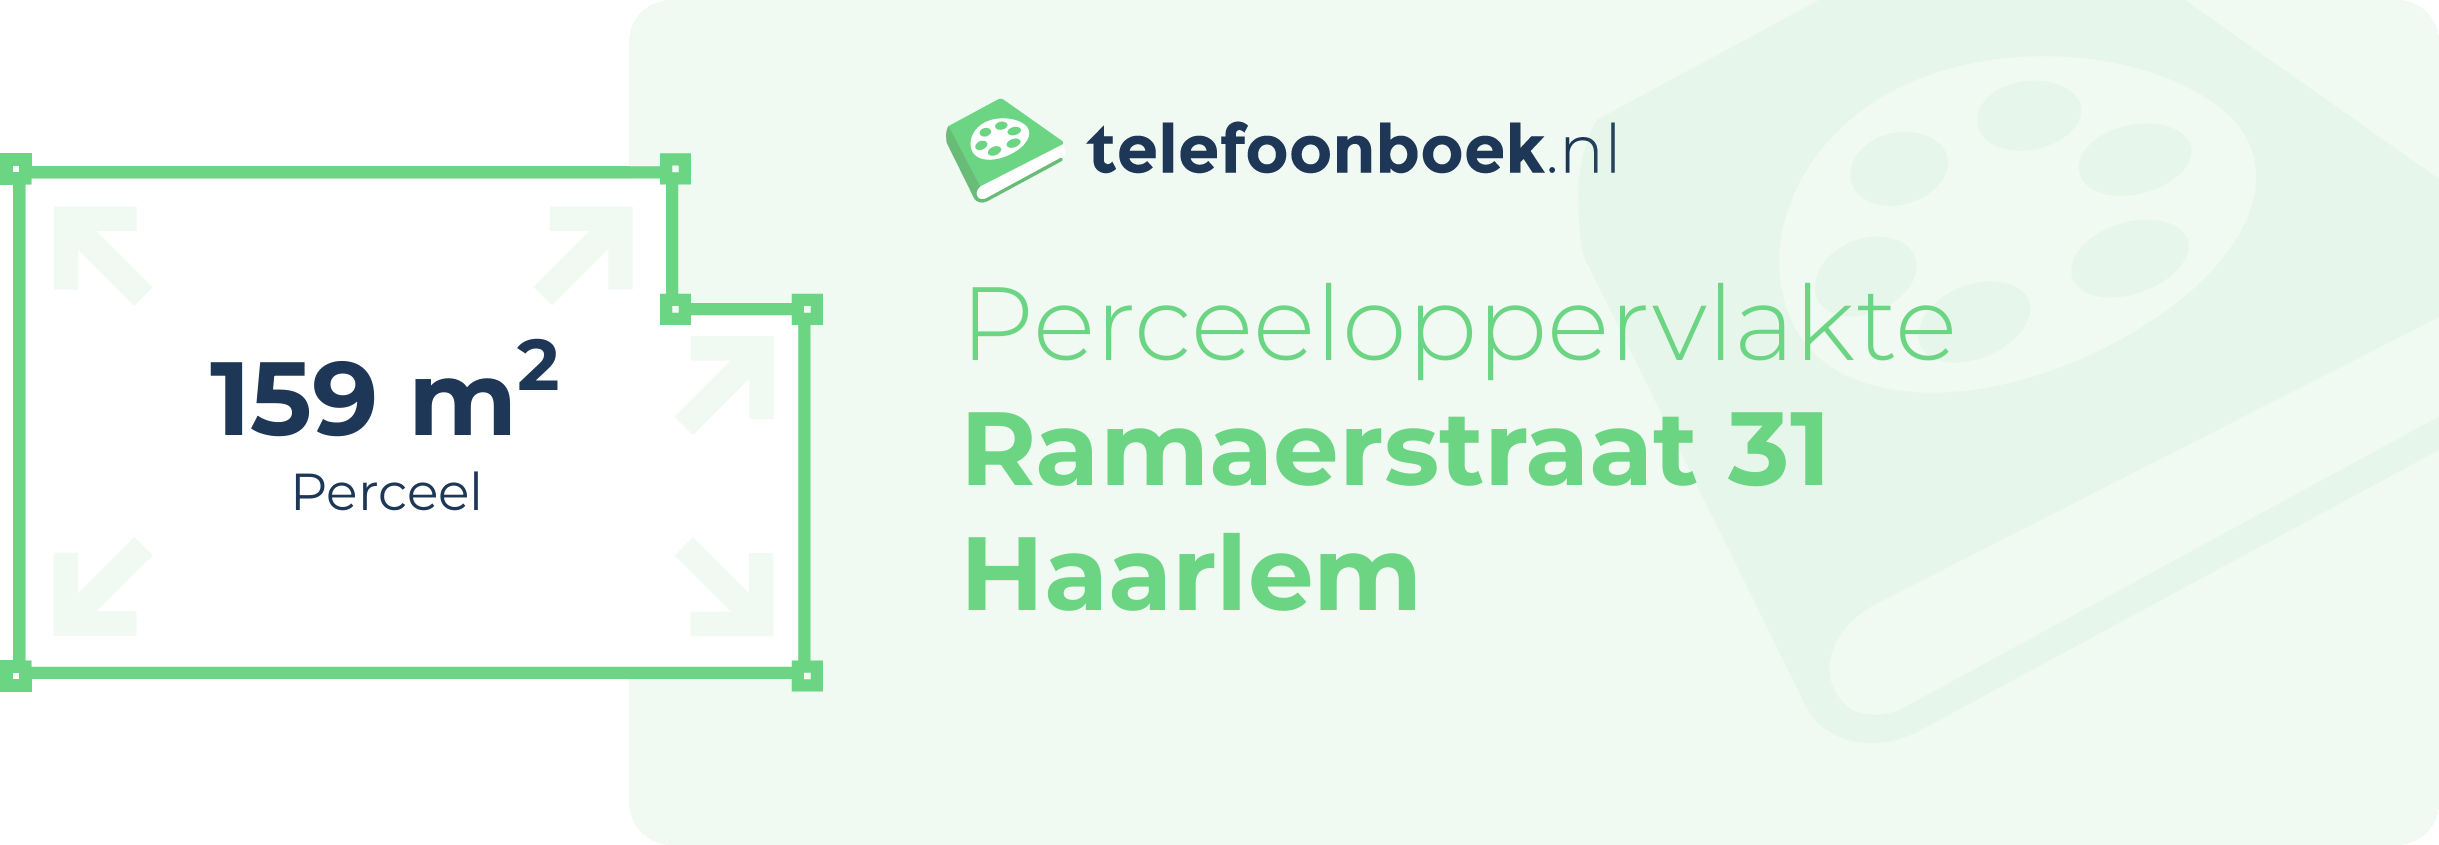 Perceeloppervlakte Ramaerstraat 31 Haarlem